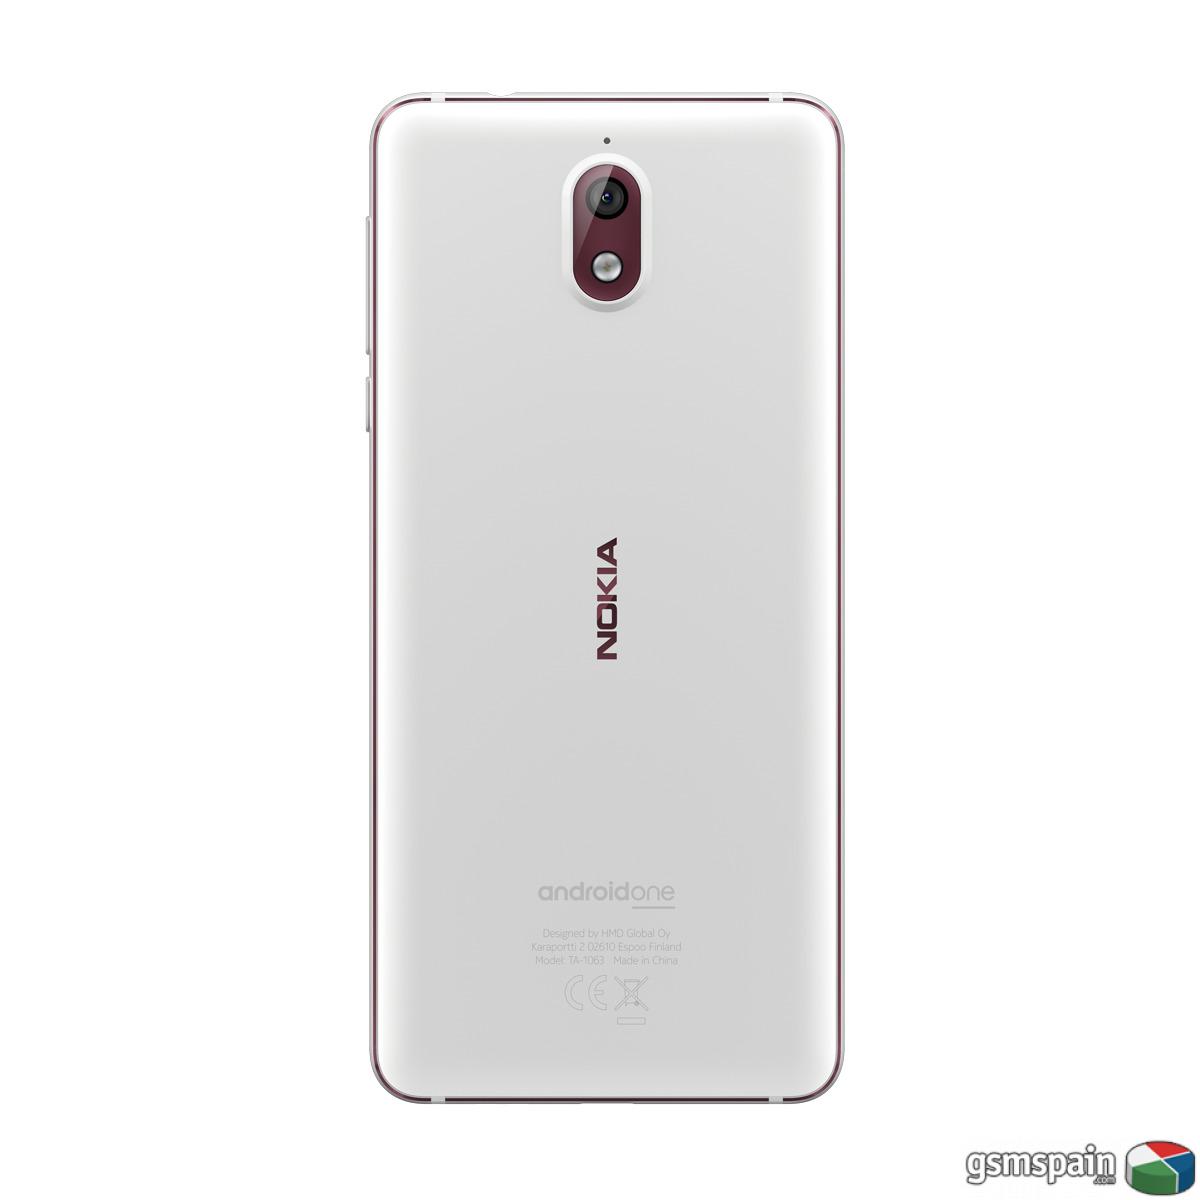 Que opinion teneis del Nokia 3.1?